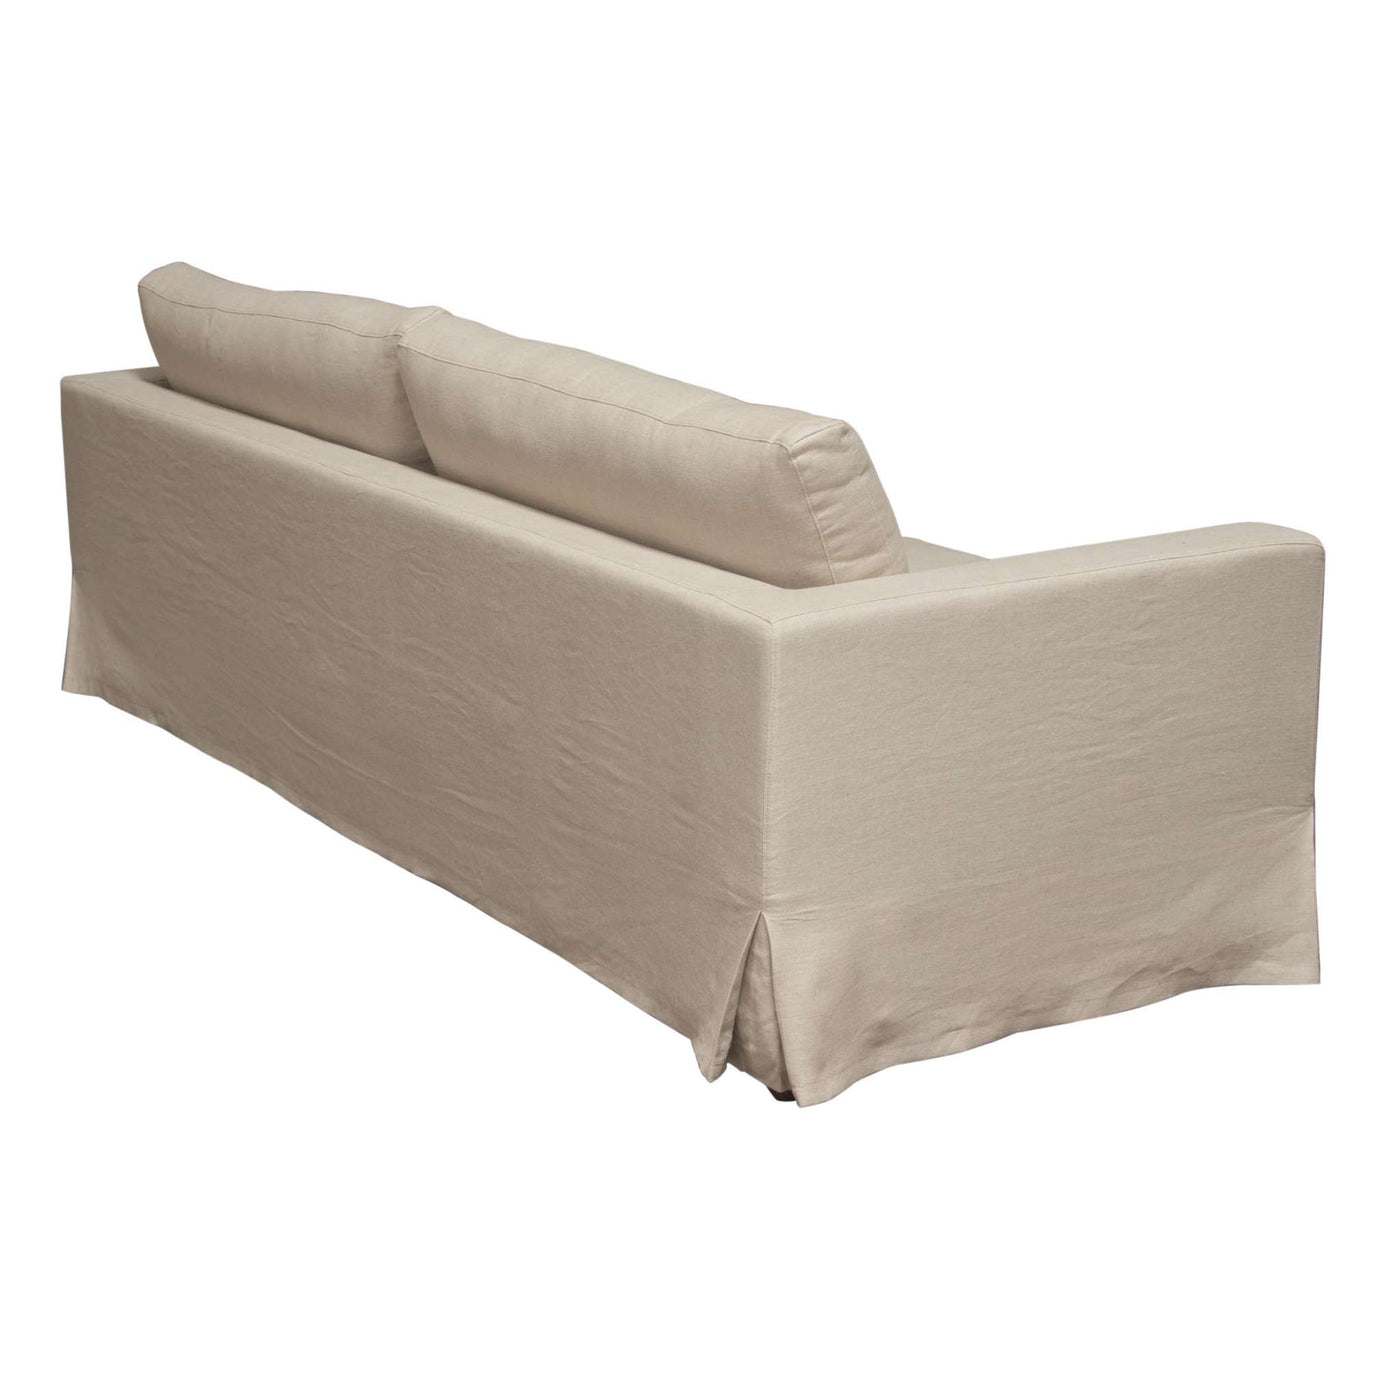 Savannah Slip-Cover Sofa in White Natural Linen by Diamond Sofa